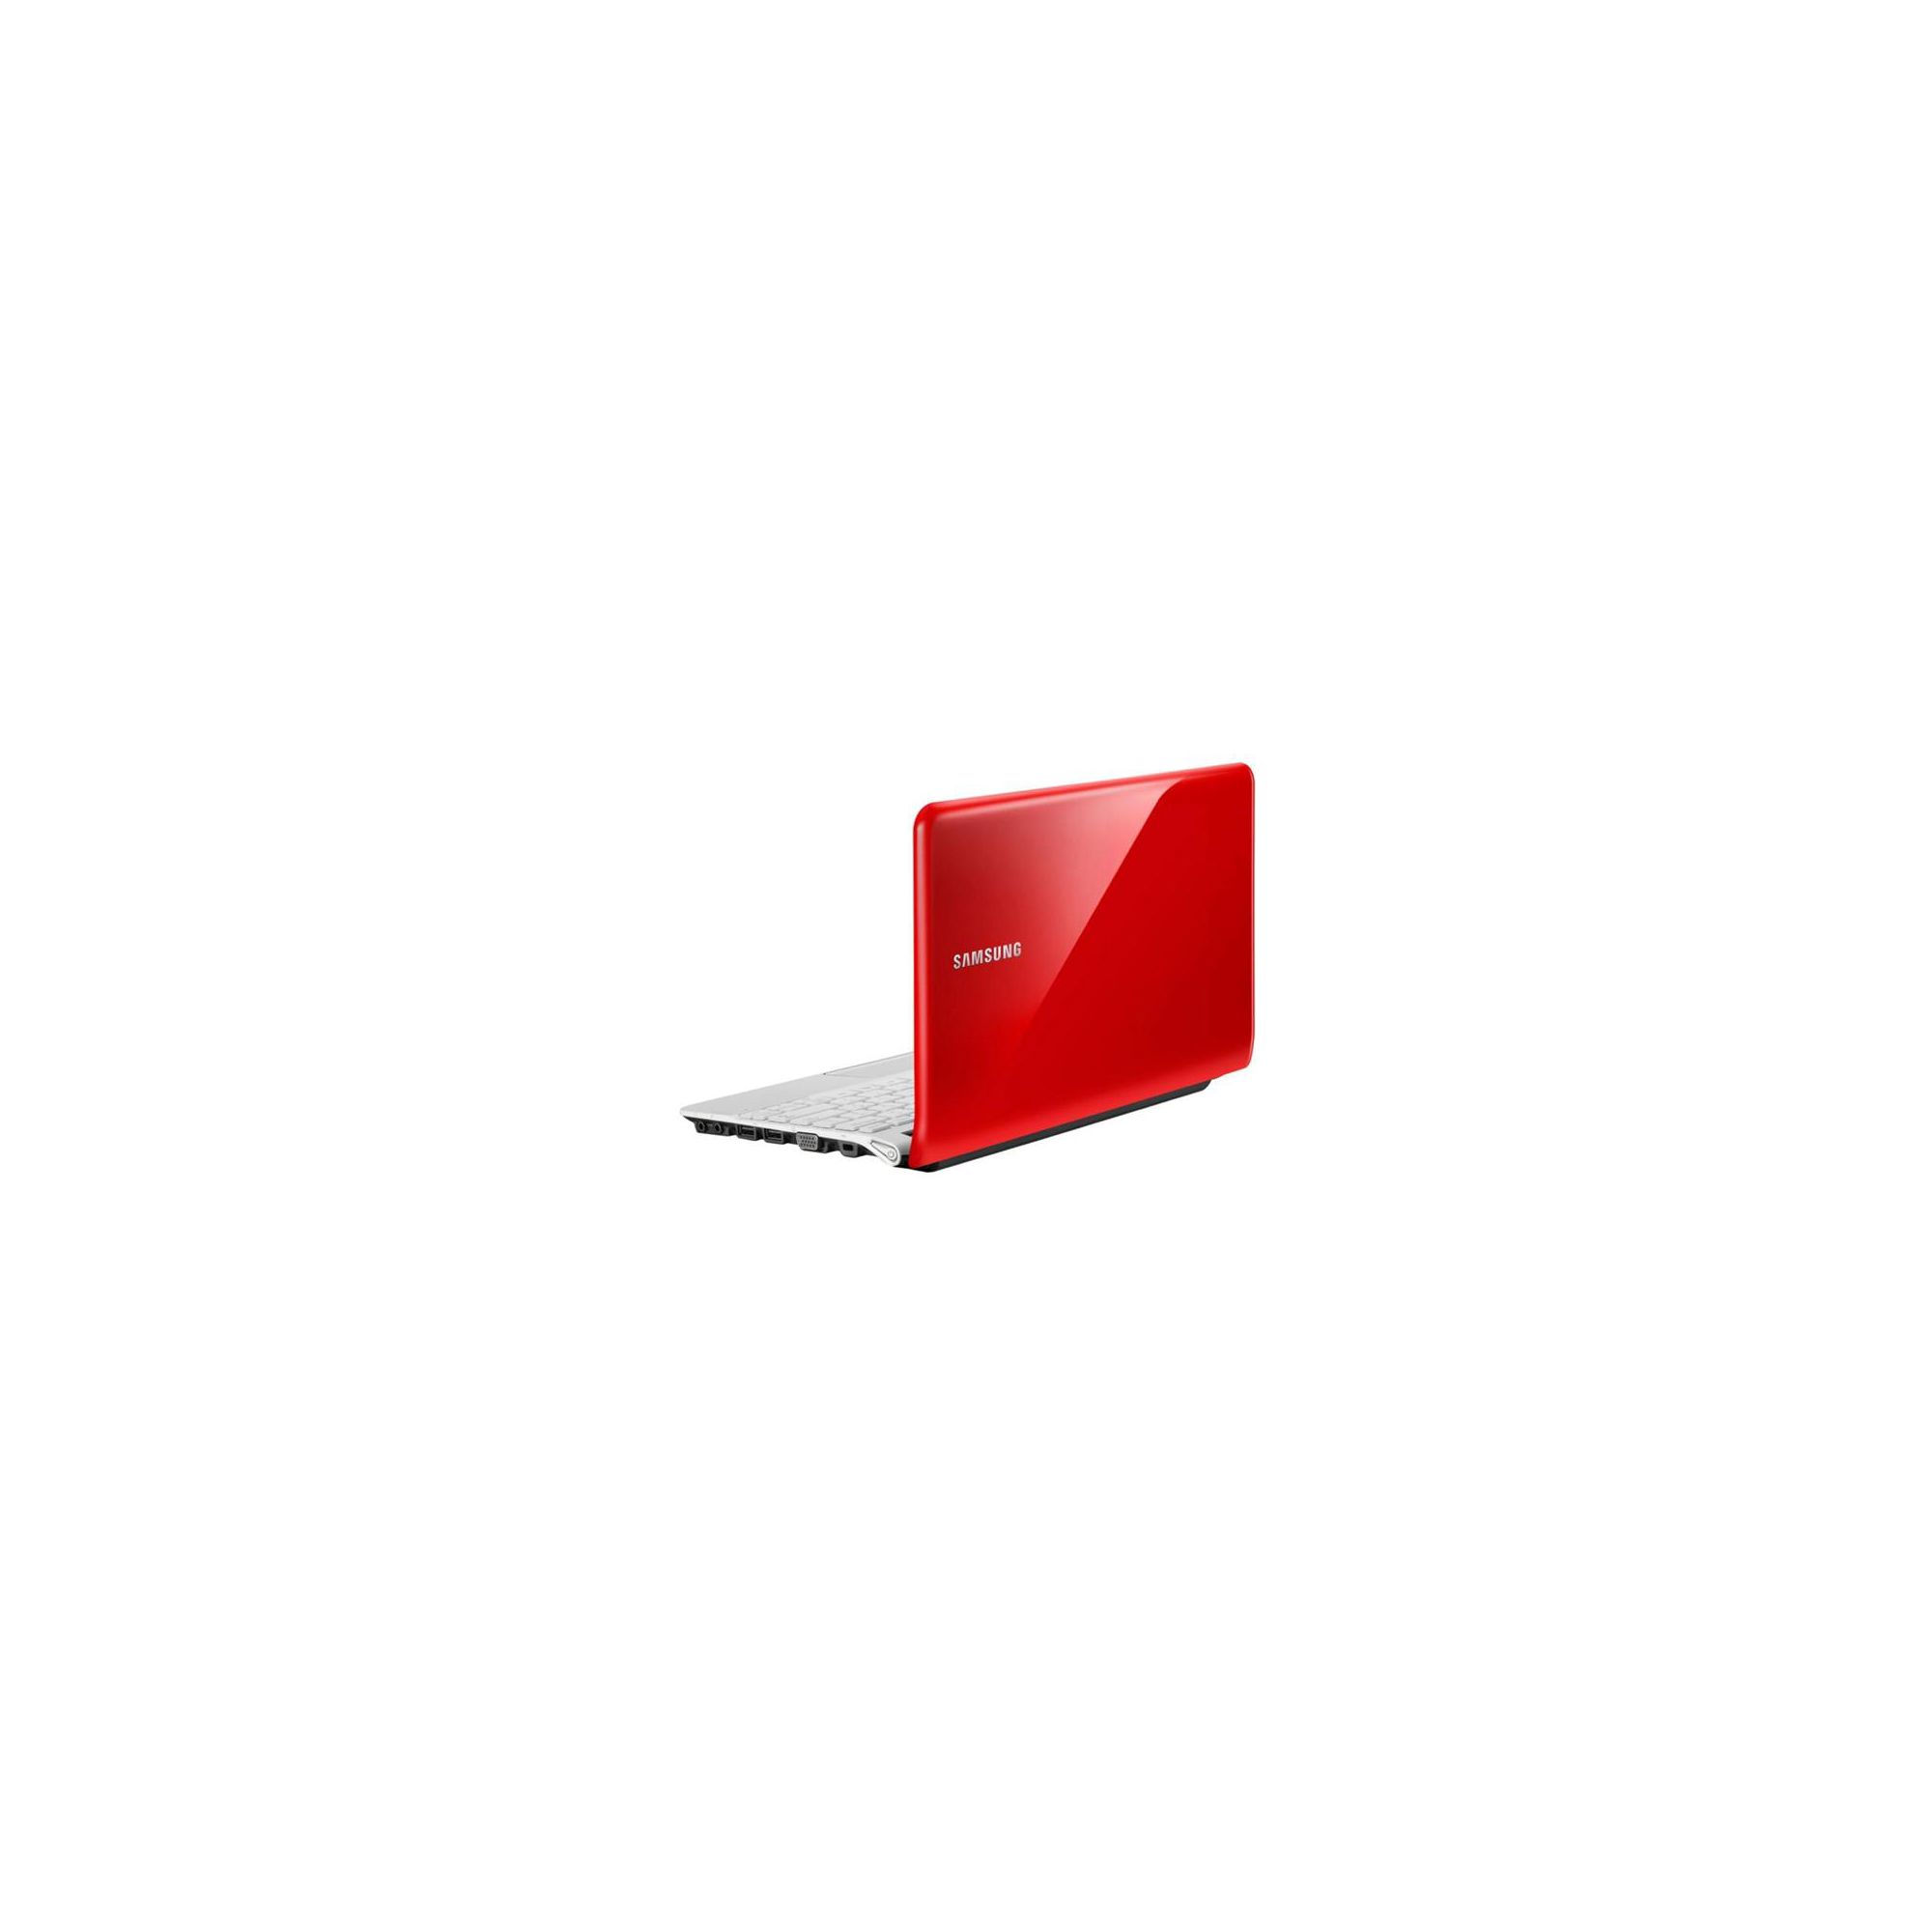 Samsung NC110 DC Netbook (Intel Atom, 1GB, 320GB, 10.1'' Display) Red at Tesco Direct